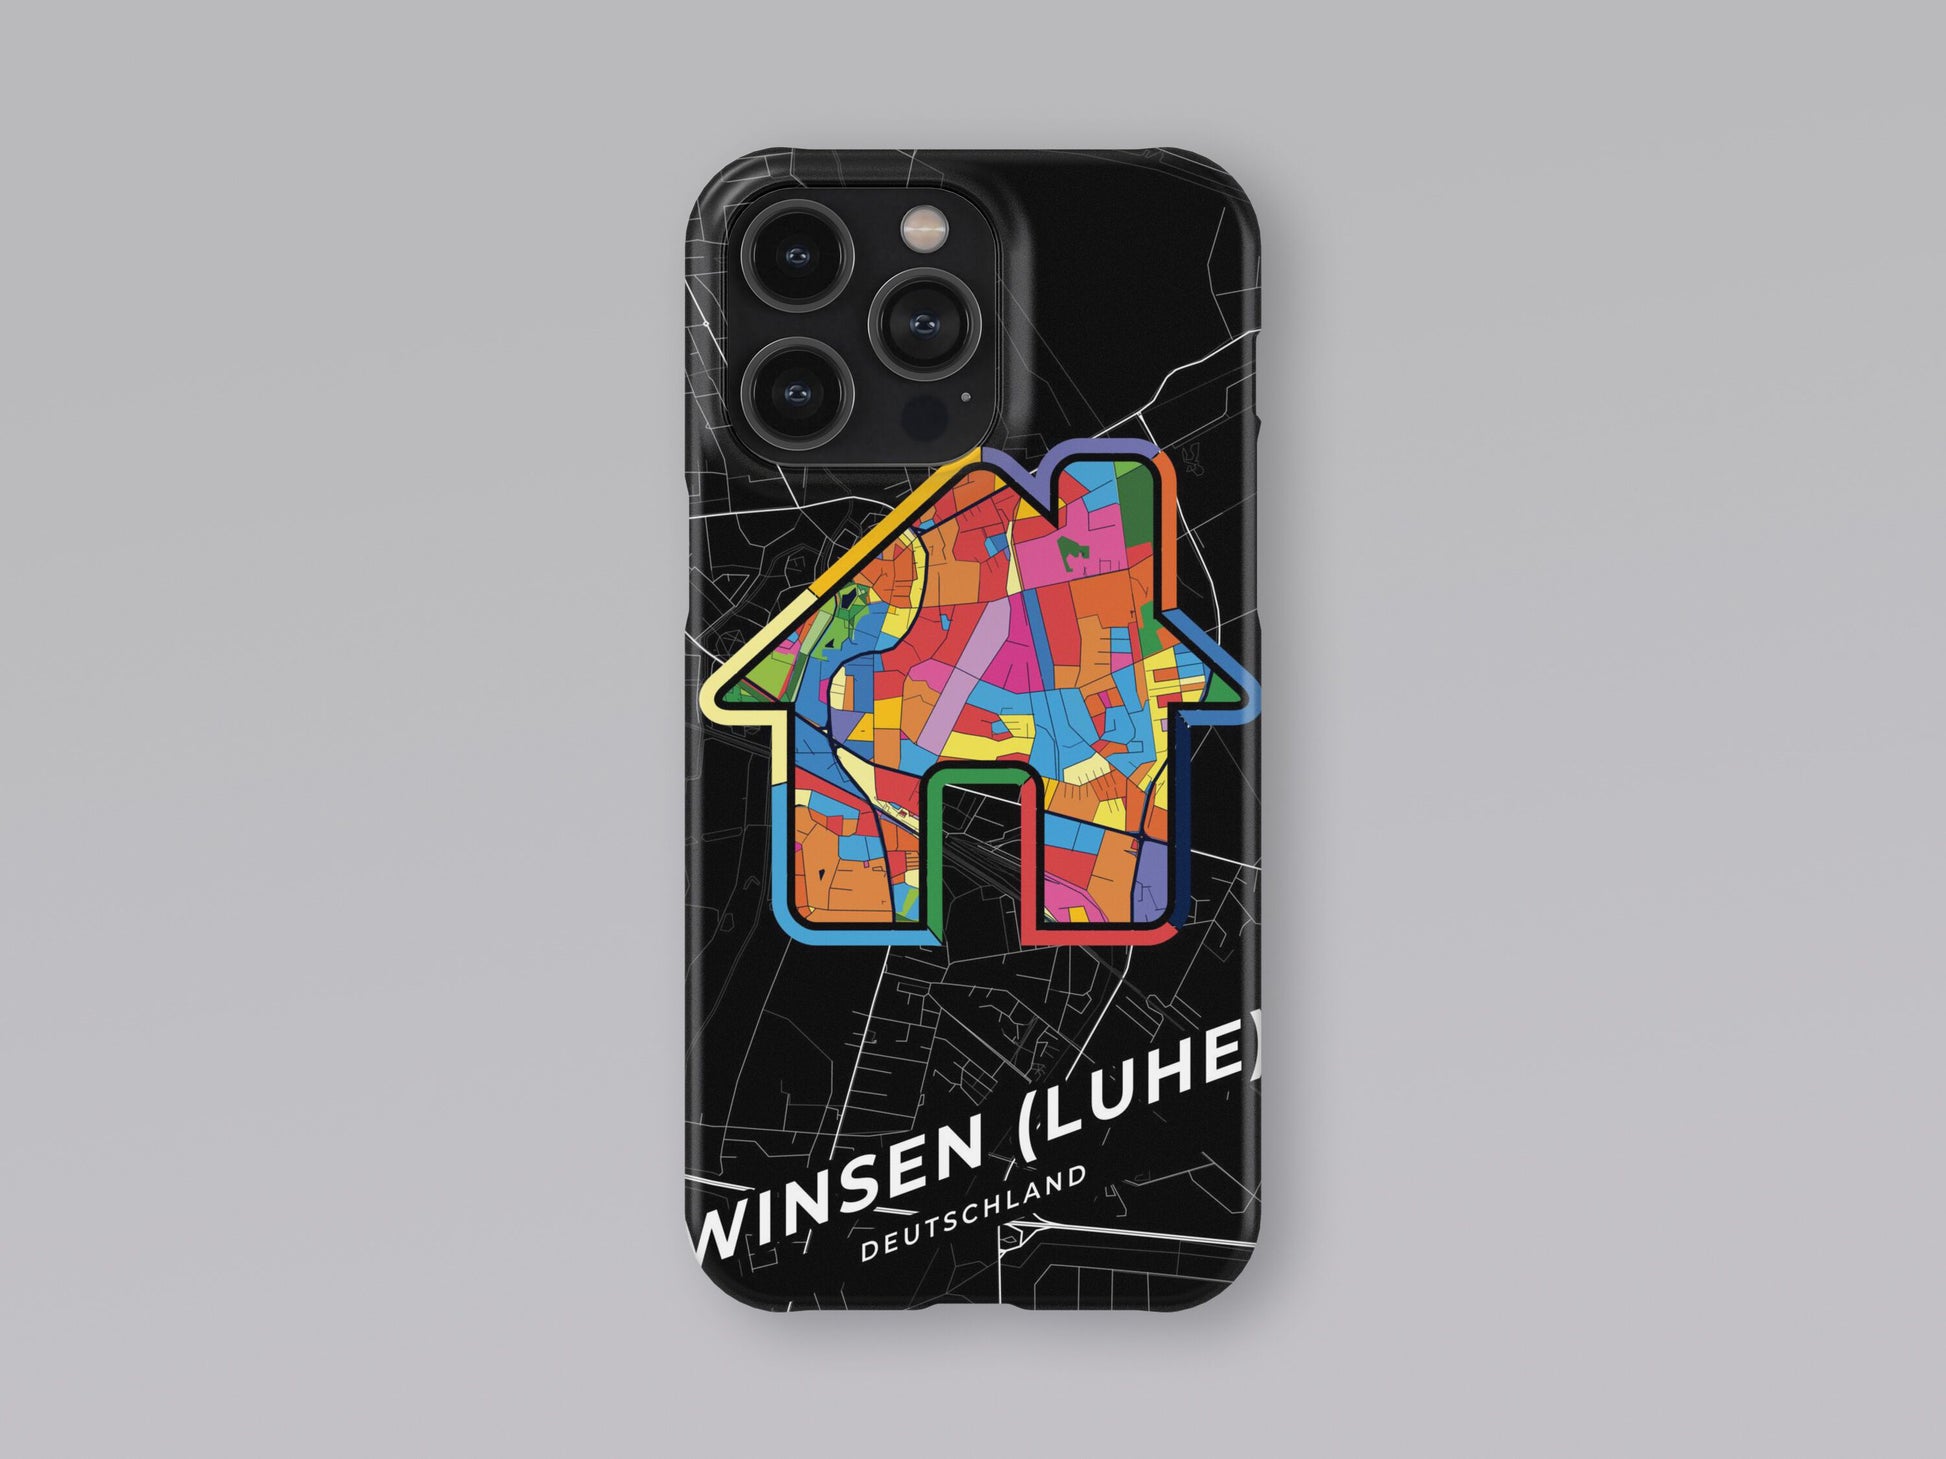 Winsen (Luhe) Deutschland slim phone case with colorful icon 3